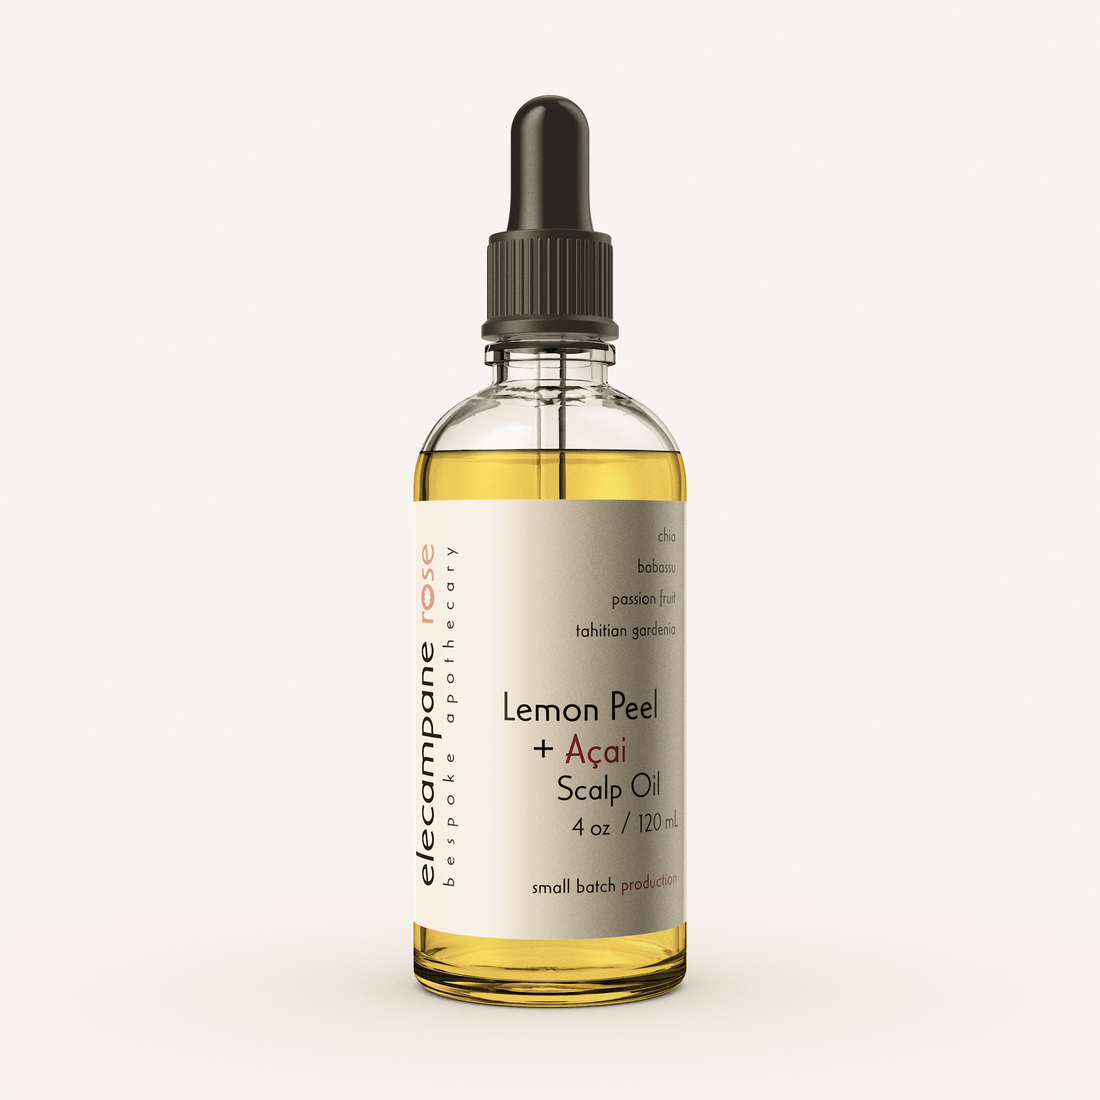 Lemon Peel + Acai Scalp Oil